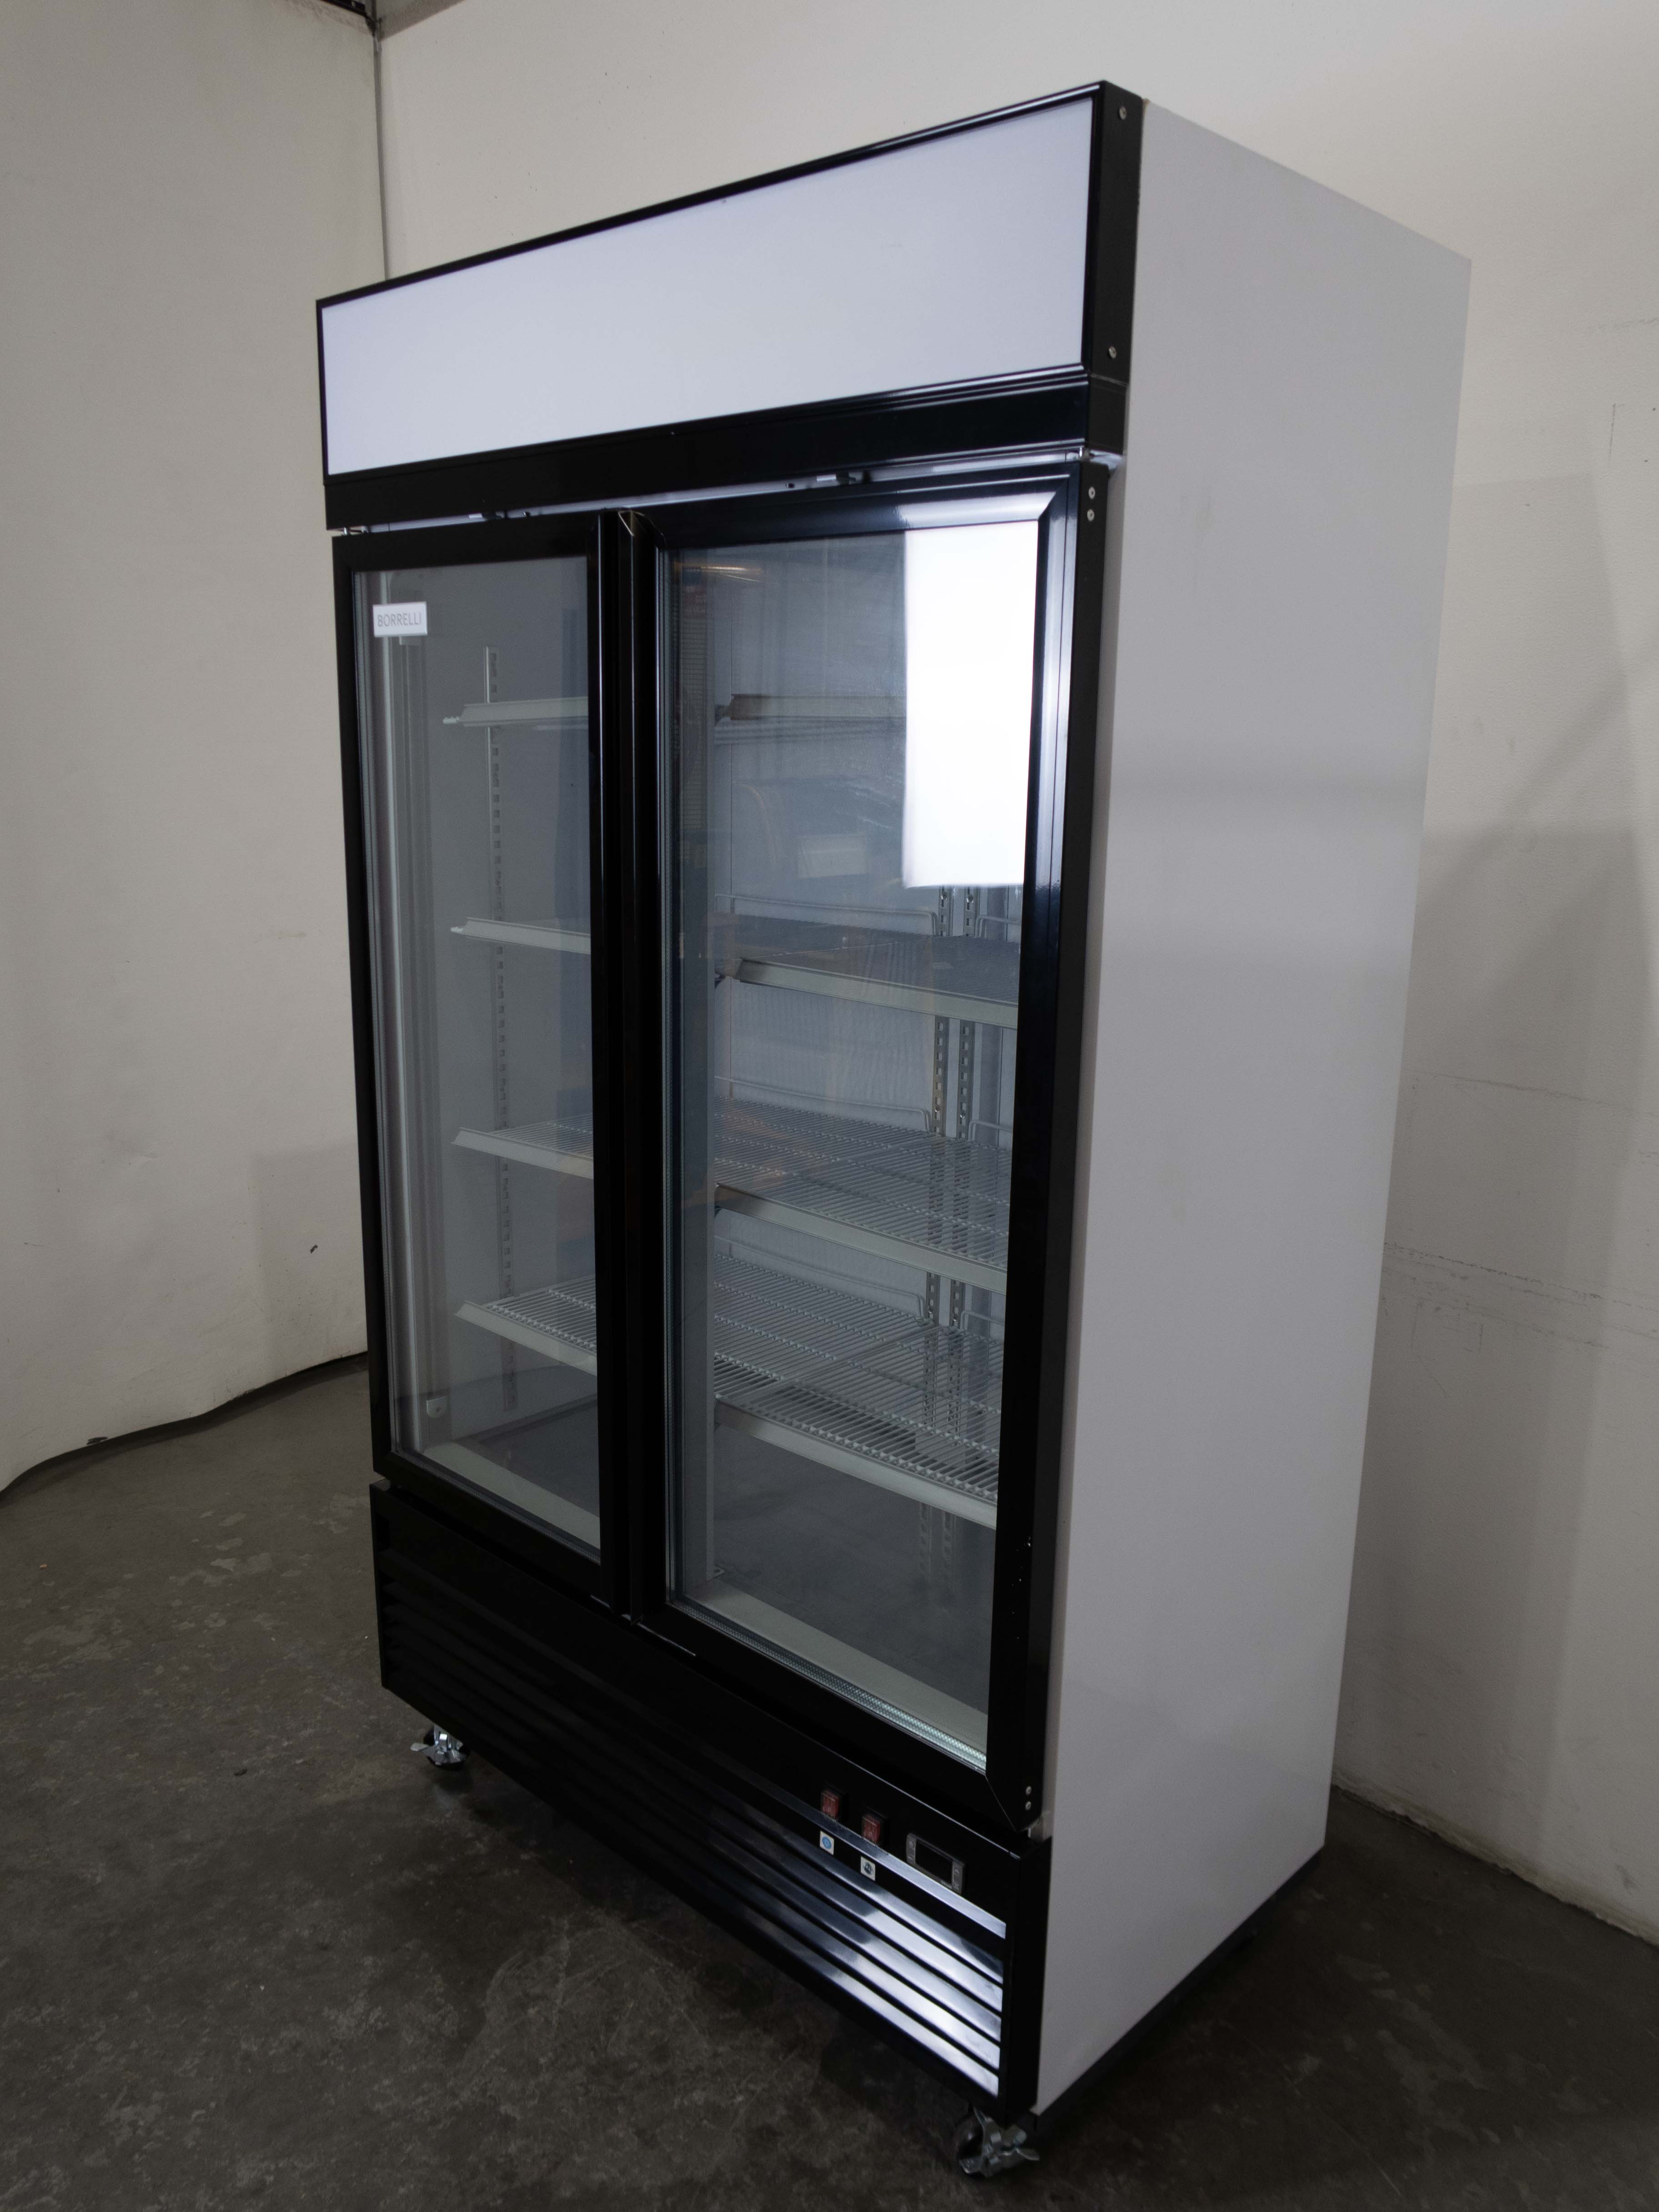 Thumbnail - Borrelli UF-1000D Display Freezer